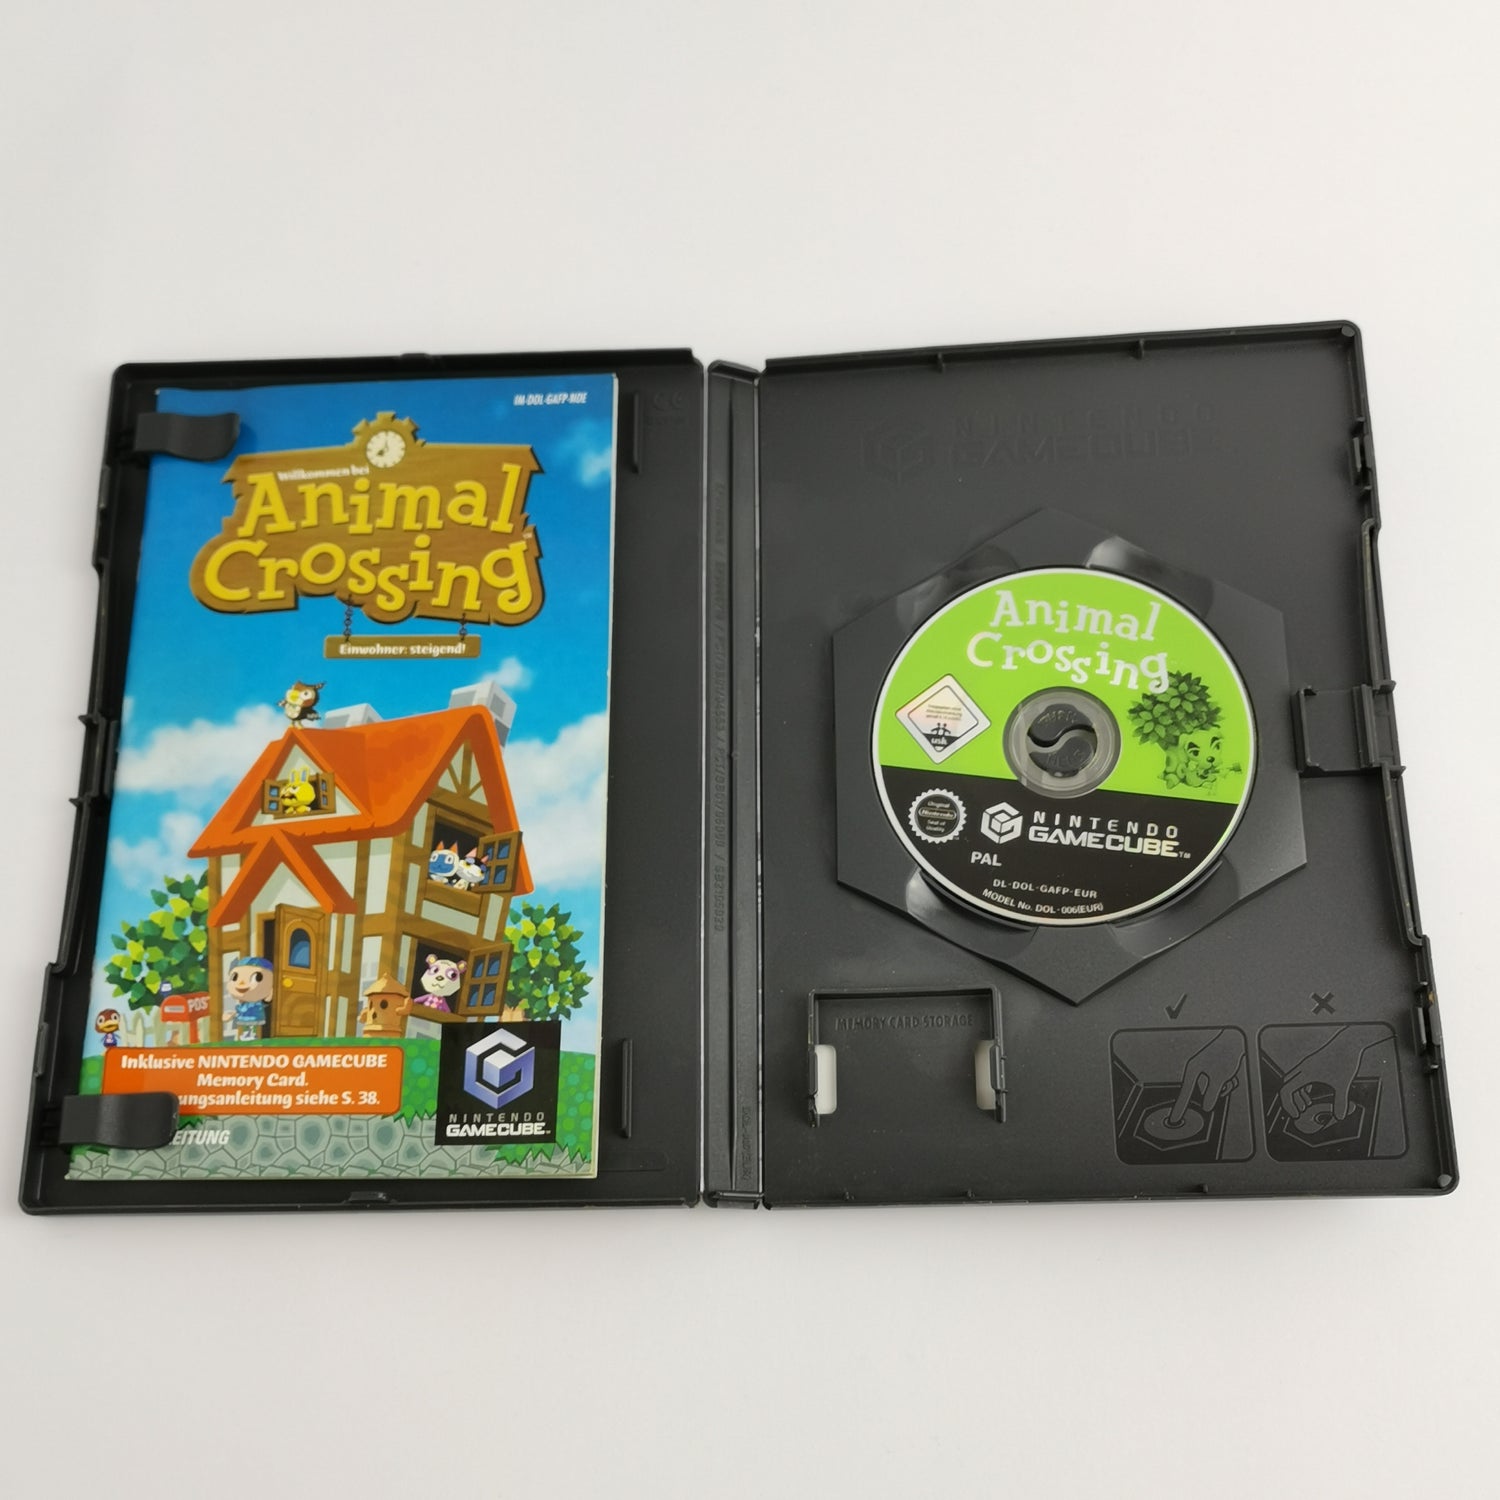 Nintendo Gamecube Game: Animal Crossing | German PAL version - original packaging